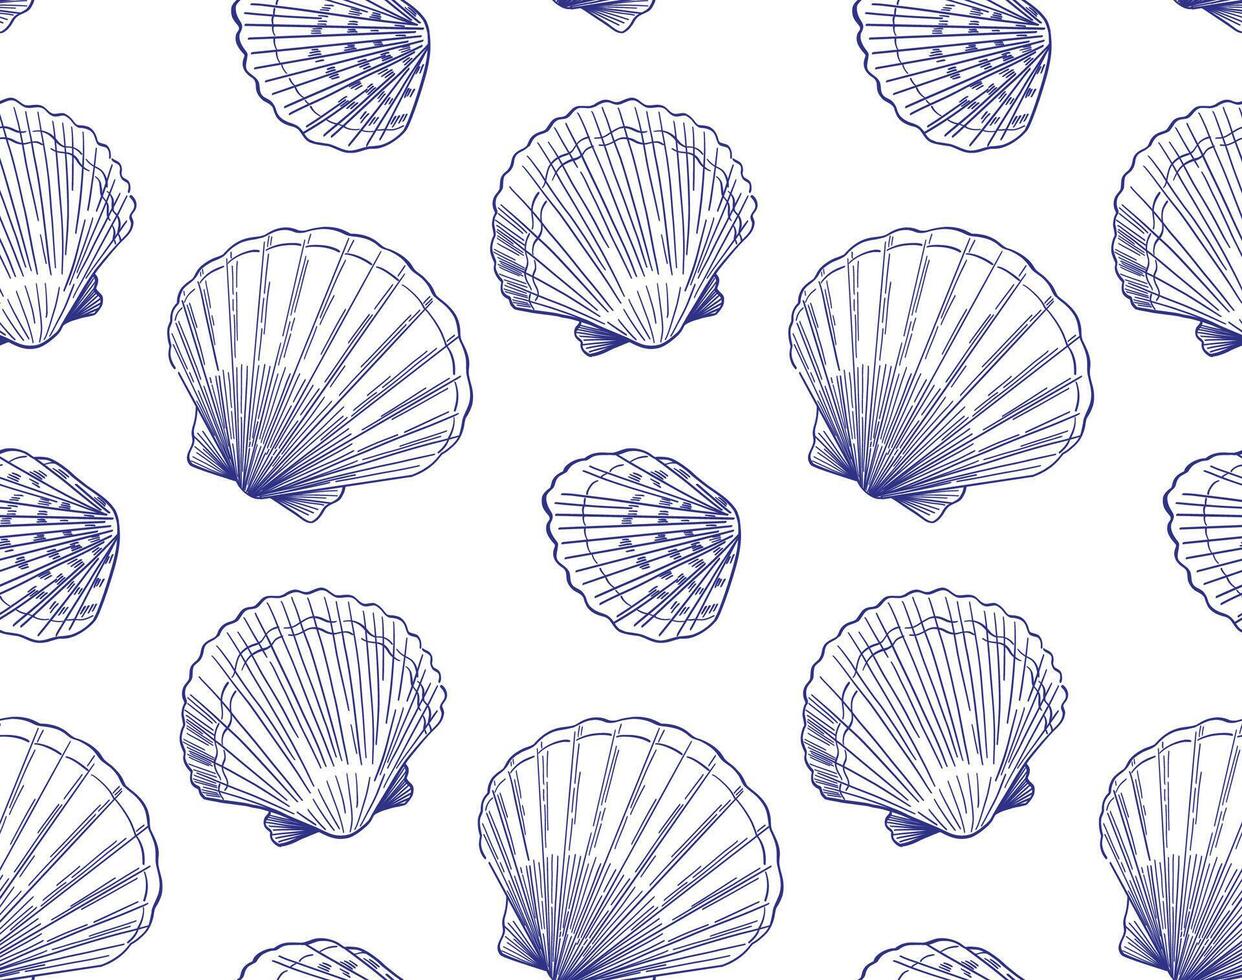 doodle style hand drawn seashells vector